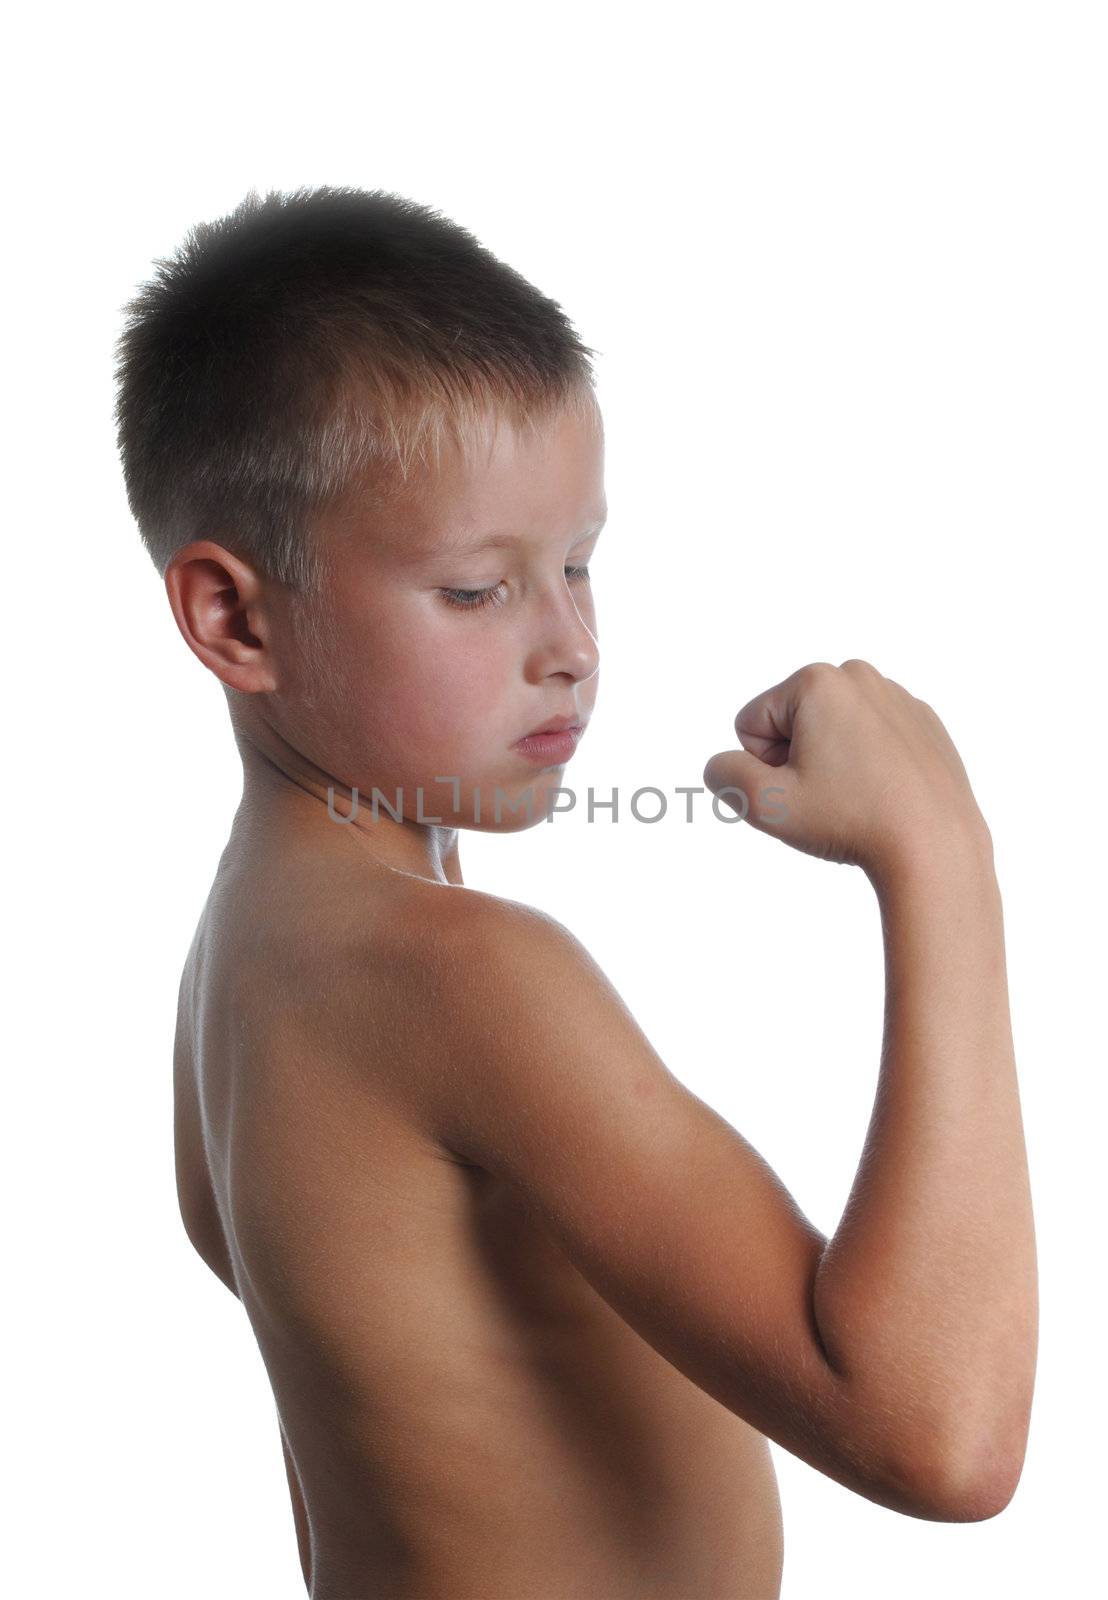 Preschool boy showing how muscu